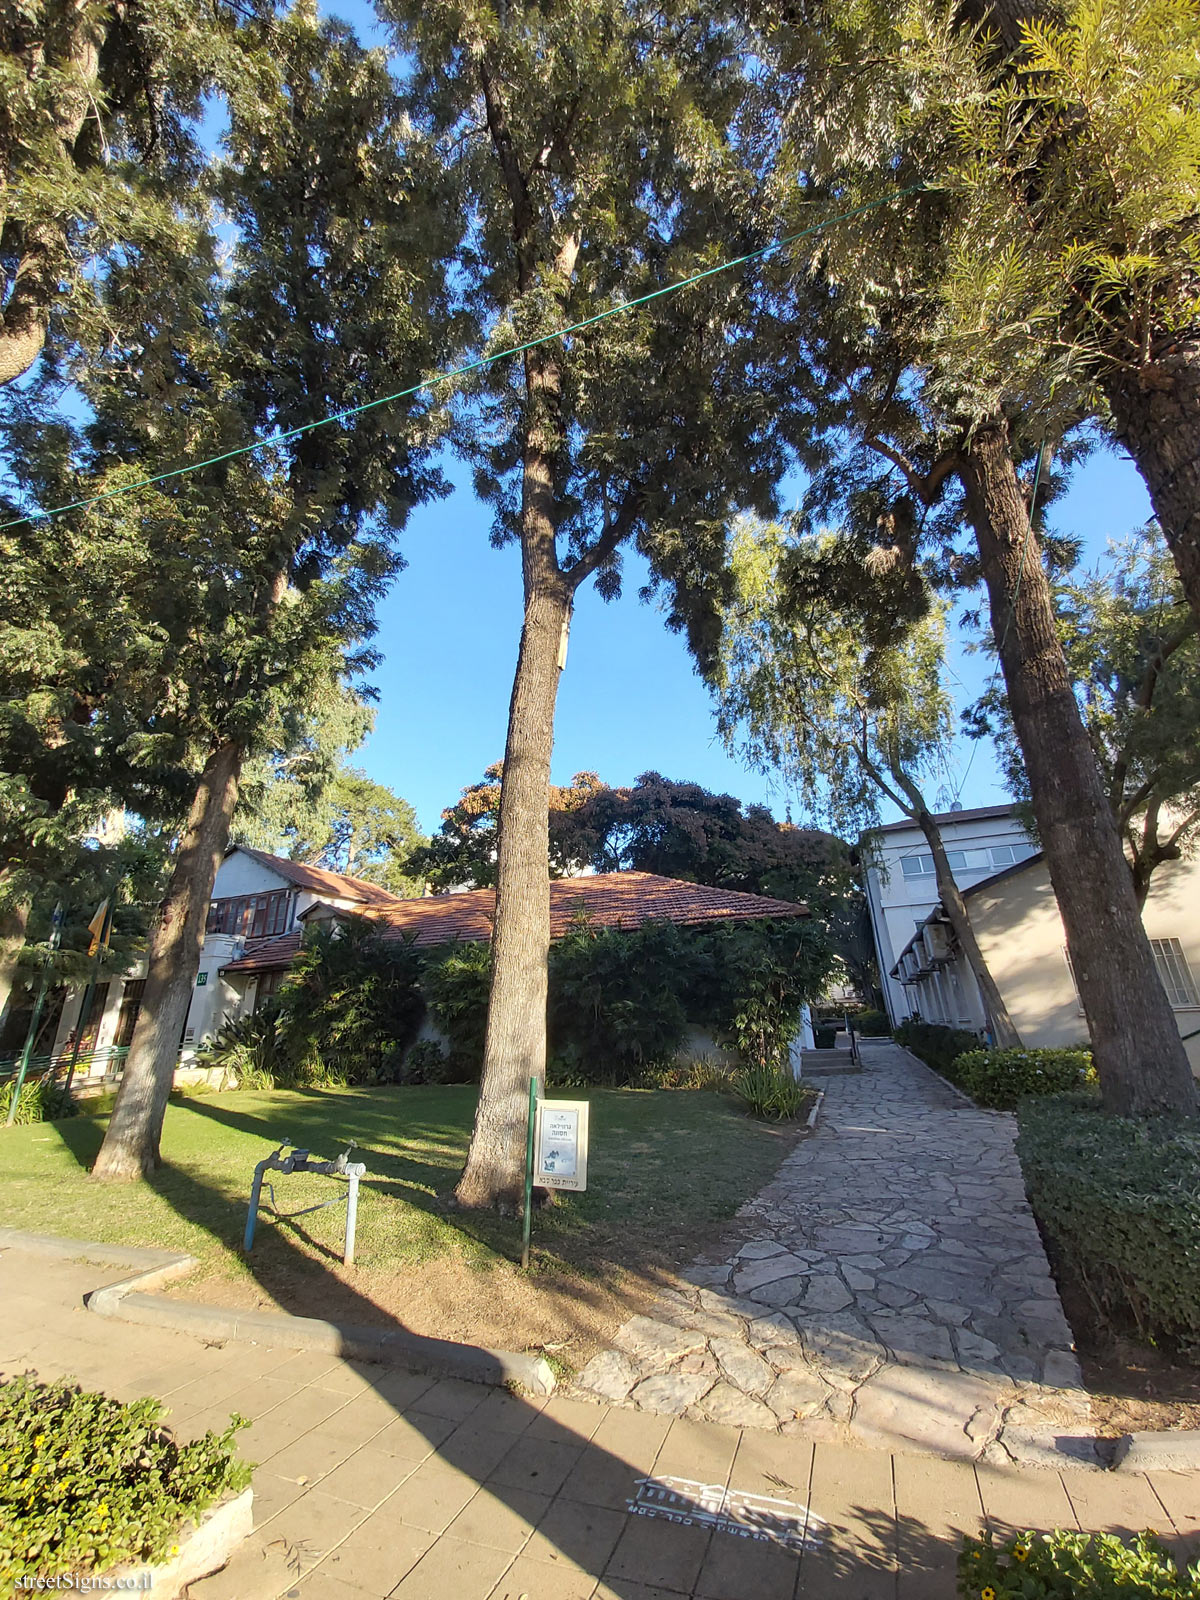 The Tree Path - Grevillea robusta - Weizmann St 135, Kefar Sava, Israel